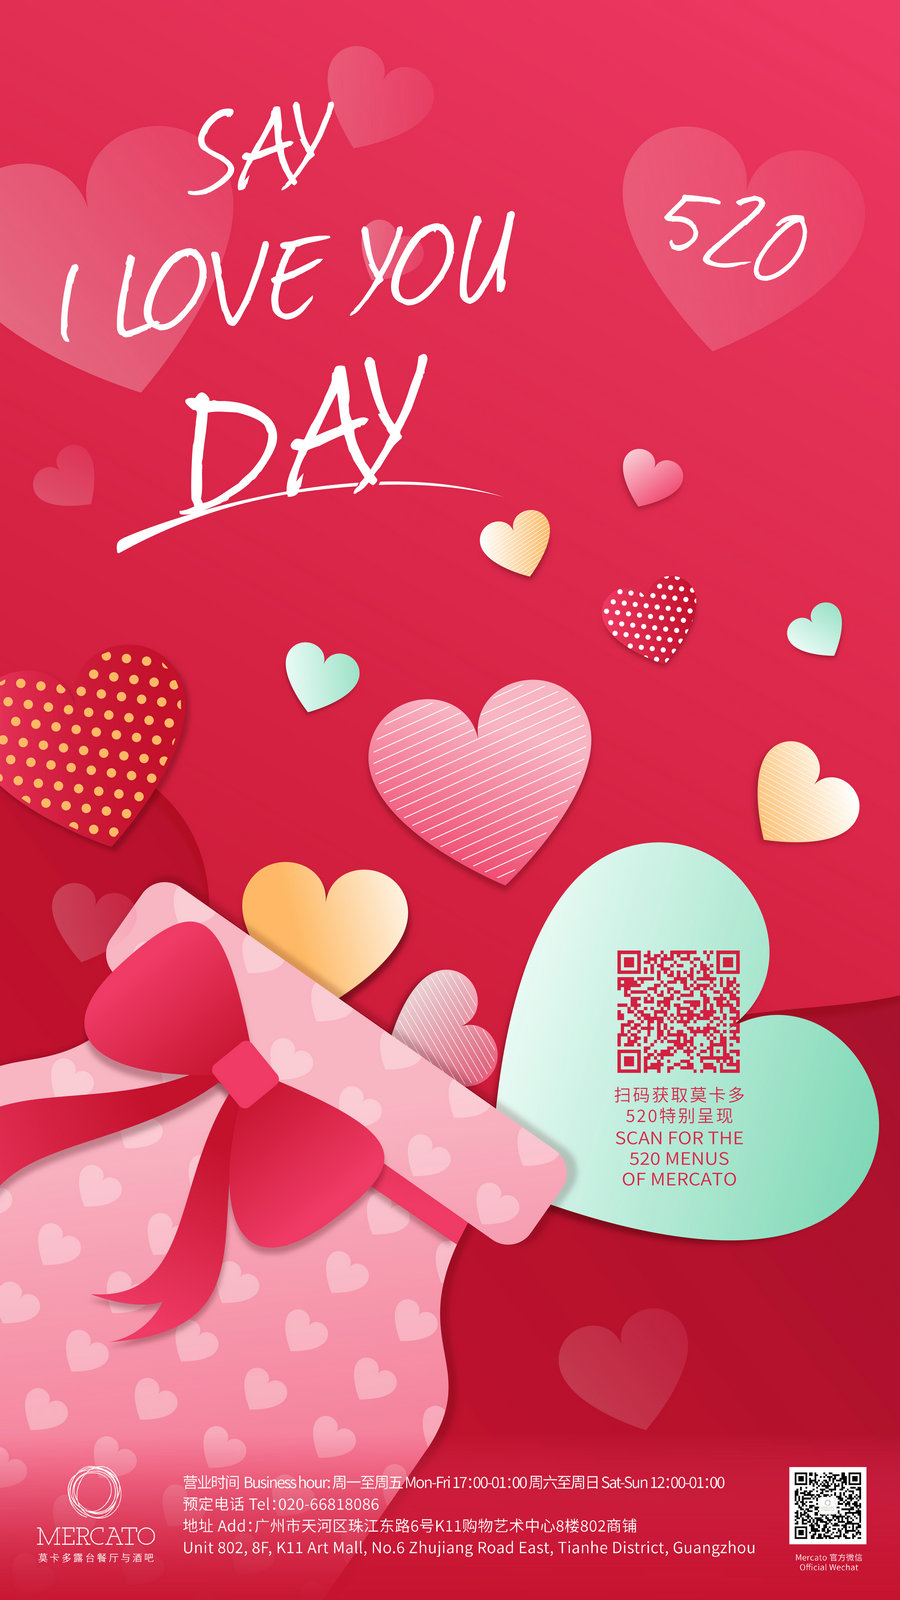 Say-I-Love-You-Day-at-Mercato.jpg